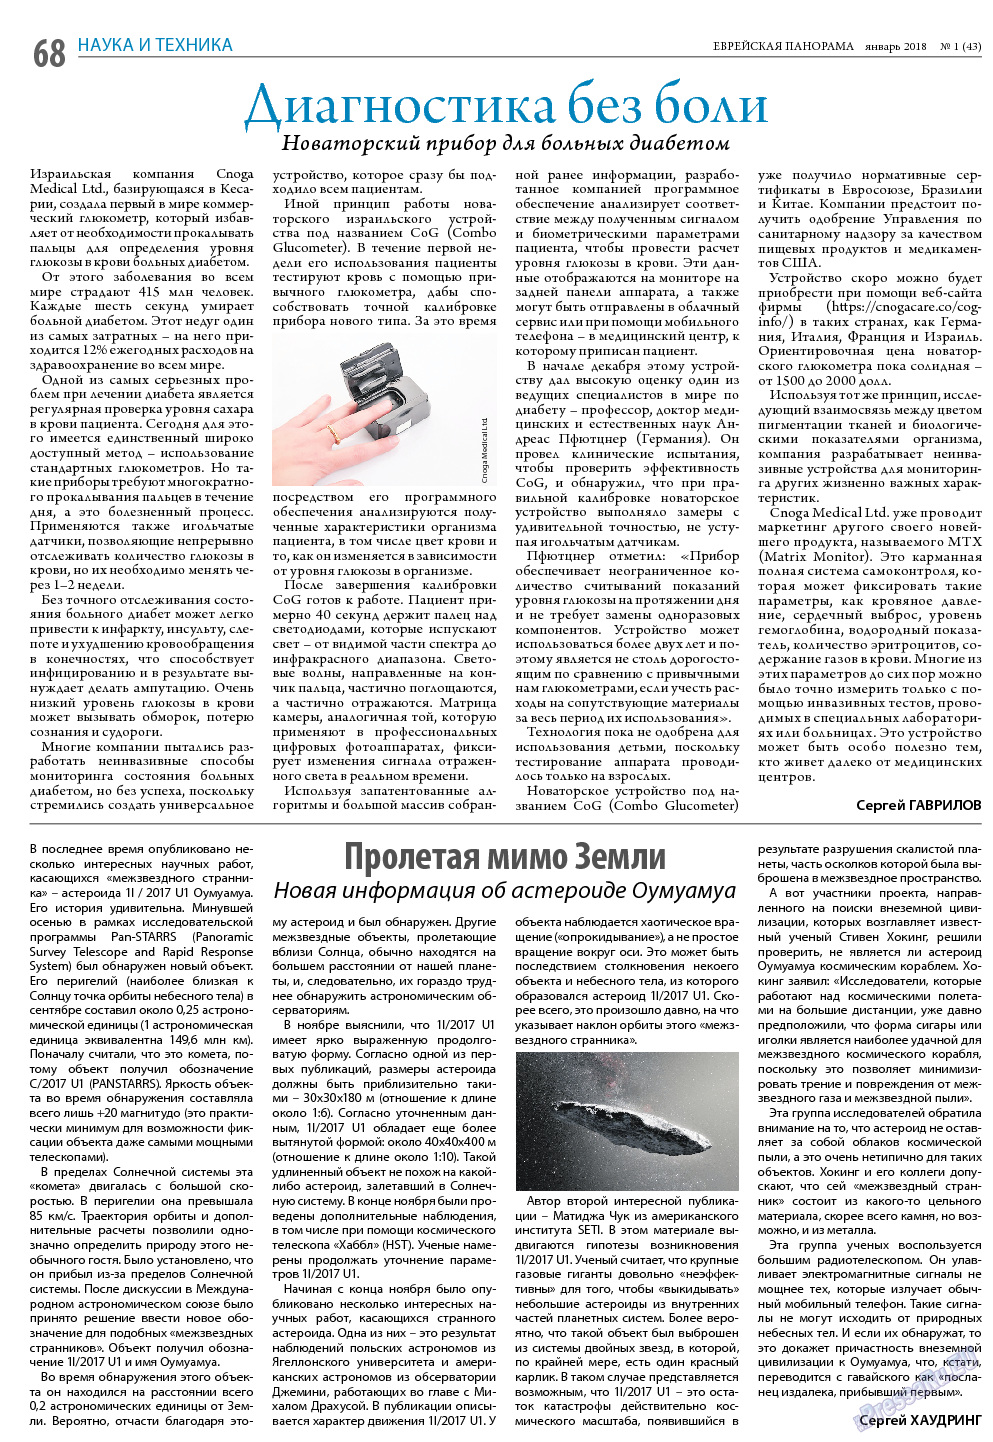 Еврейская панорама, газета. 2018 №1 стр.68